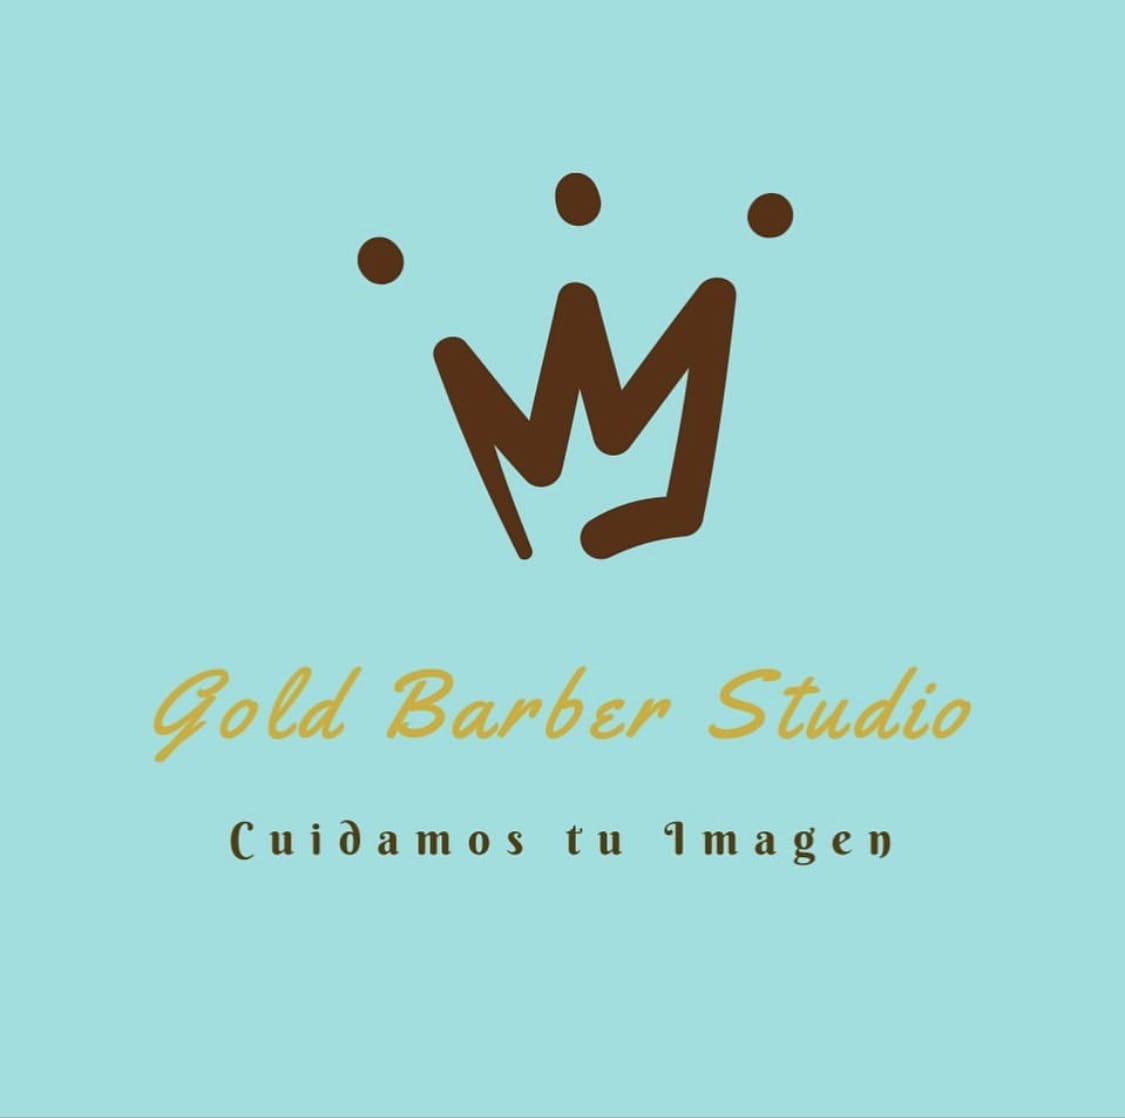 Gold Barber Studio